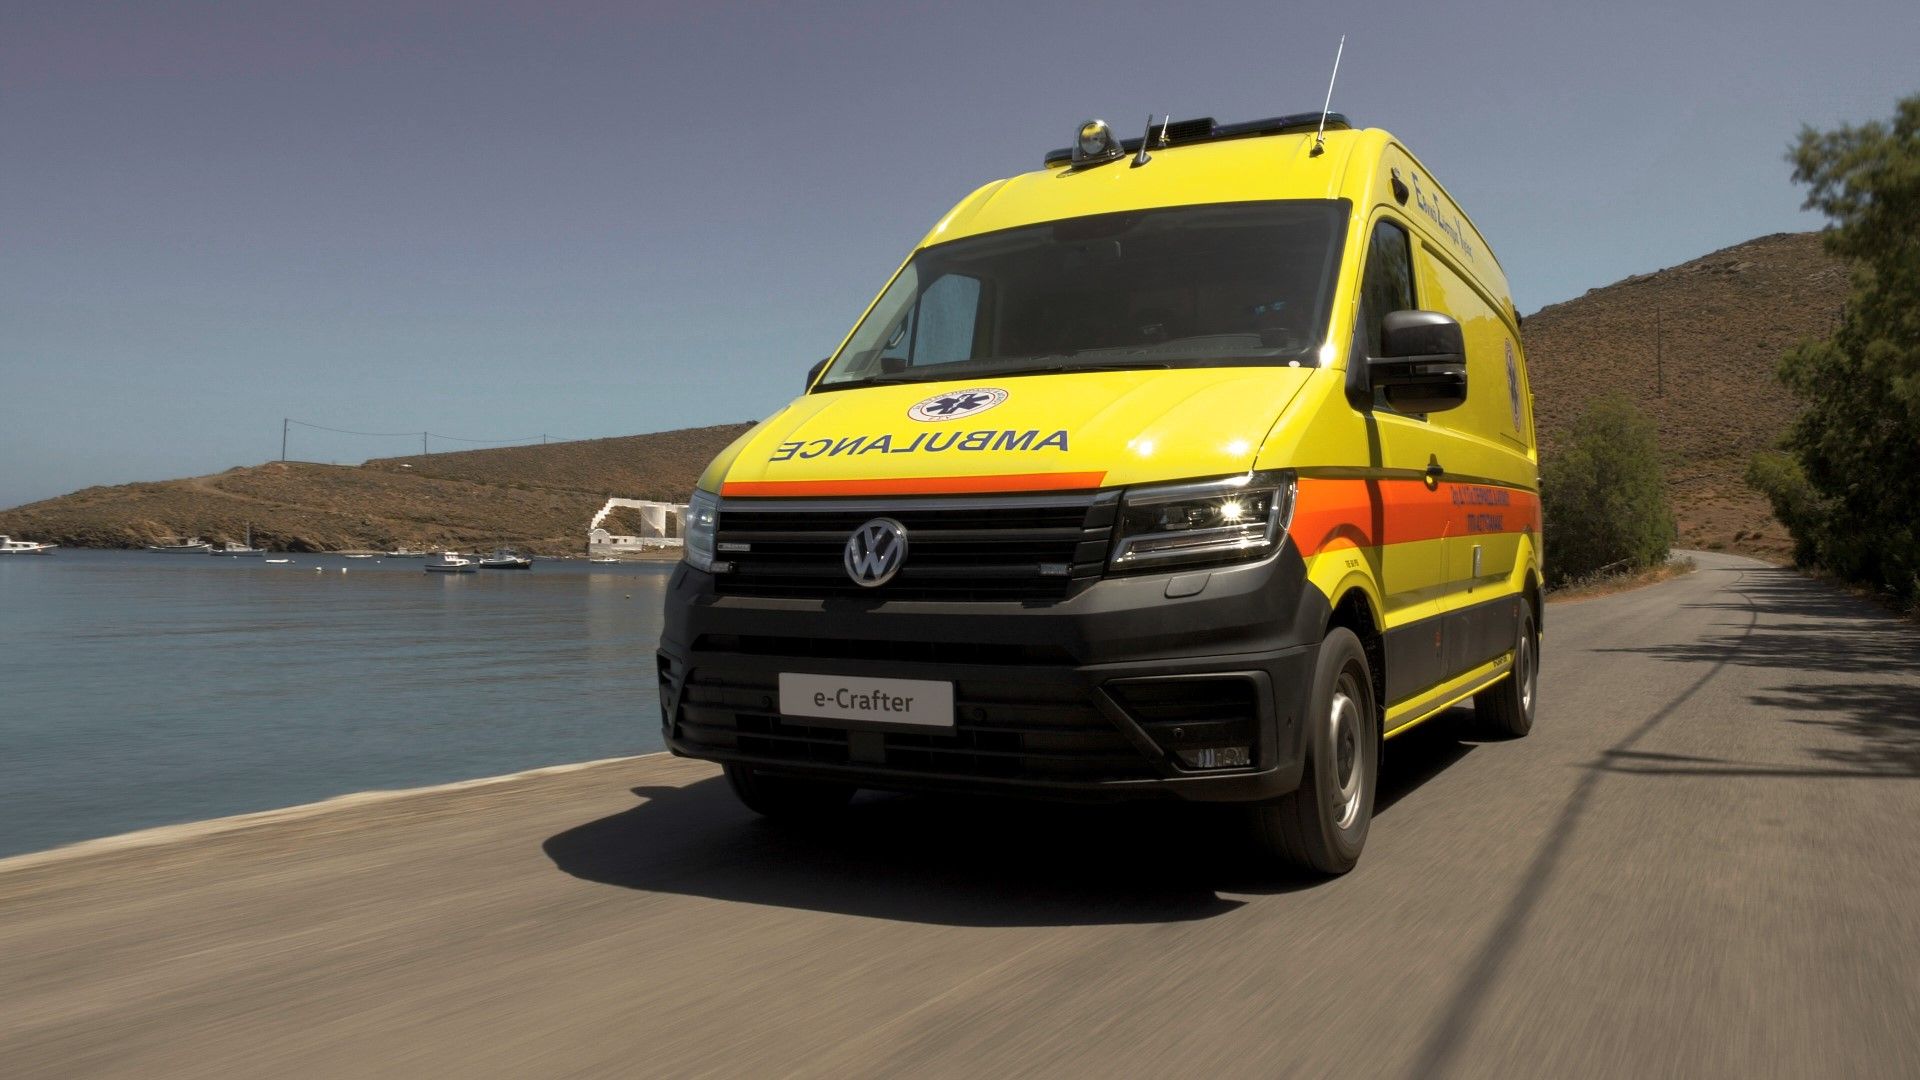 Volkswagen e-Crafter: Ηλεκτρικό ασθενοφόρο στην Αστυπάλαια